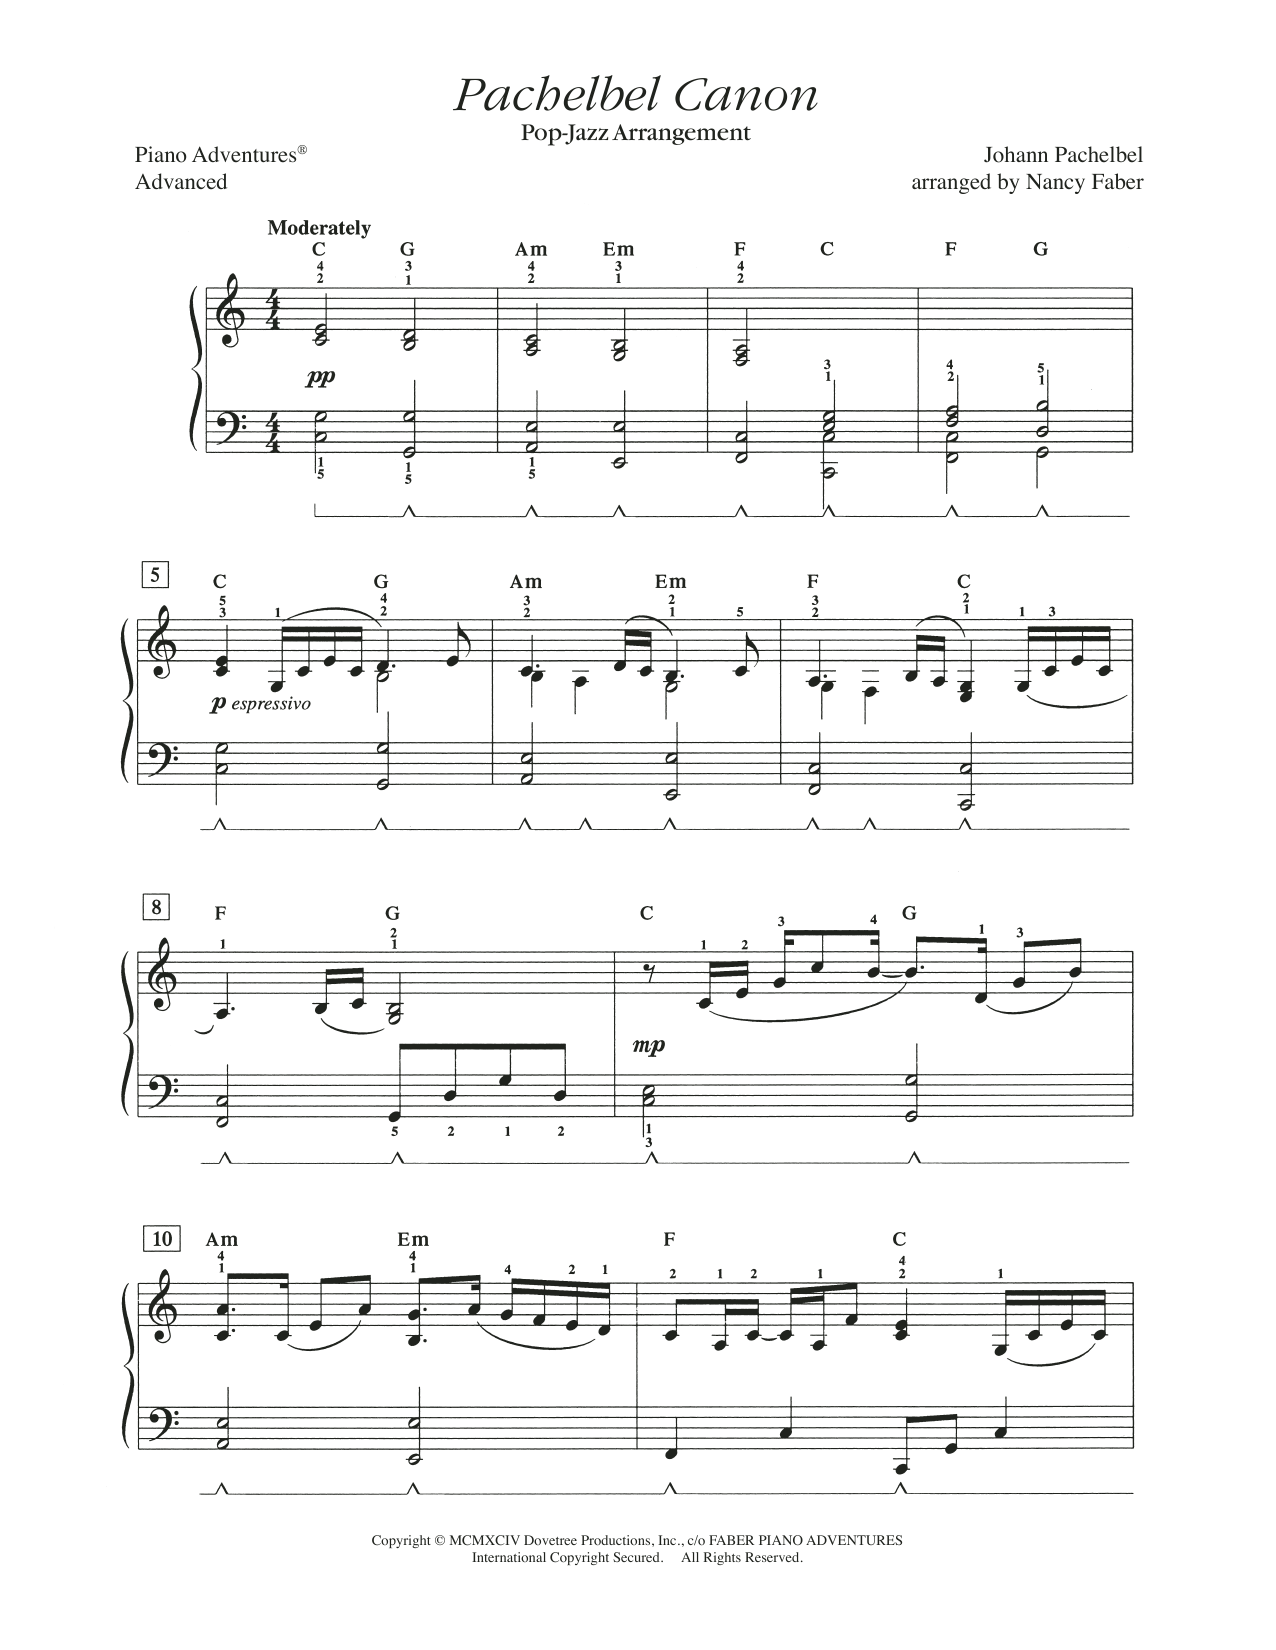 Nancy Faber Pachelbel Canon (Pop-Jazz Arrangement) Sheet Music Notes & Chords for Piano Adventures - Download or Print PDF